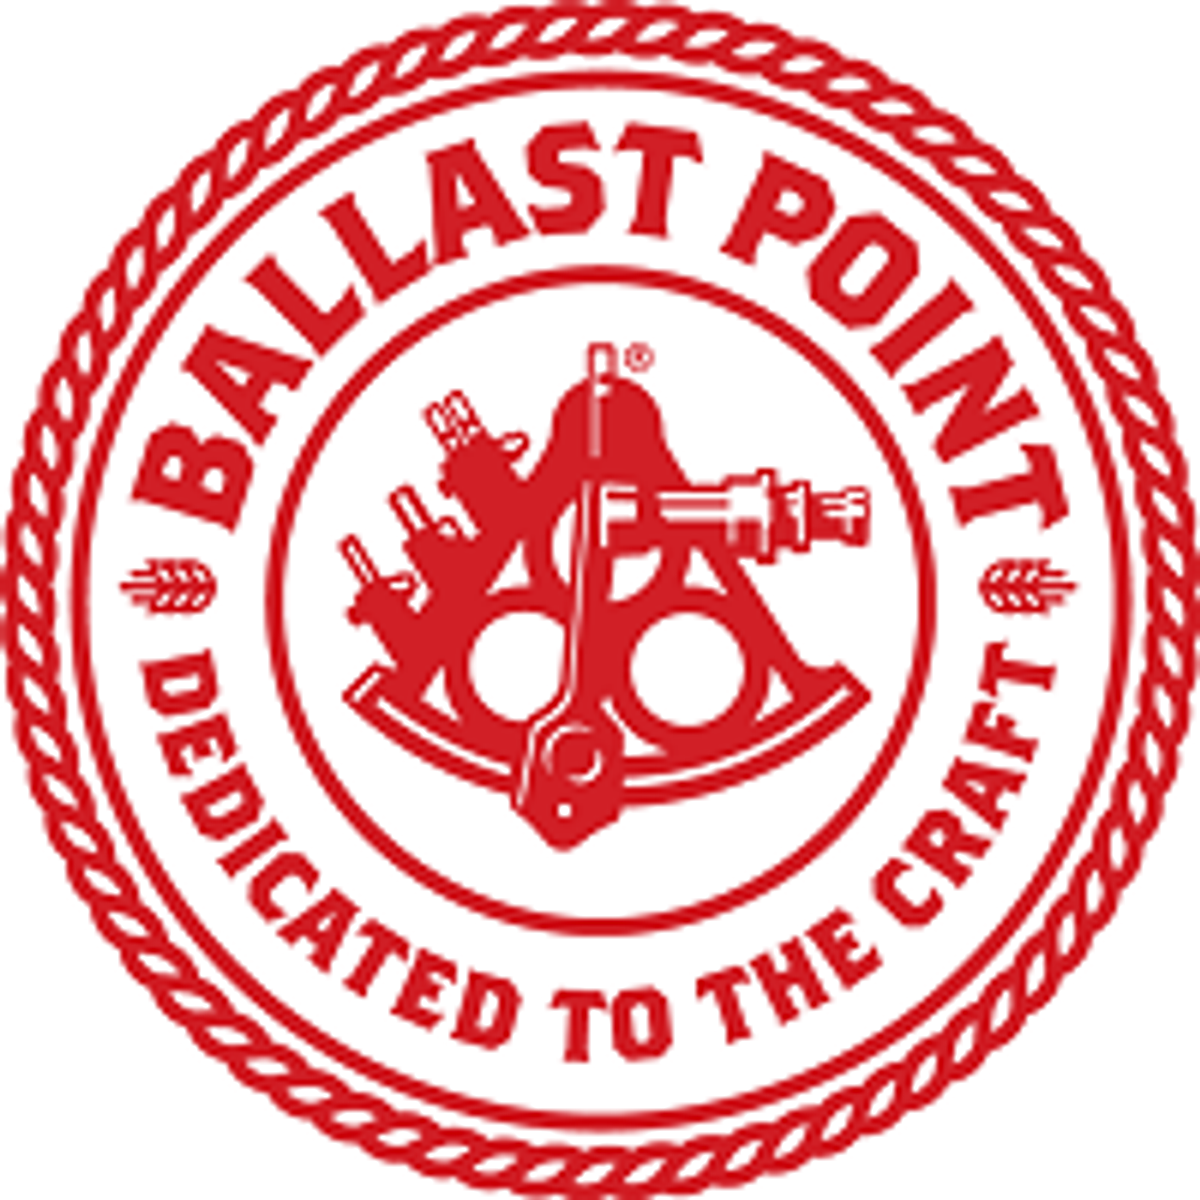 ballast point yacht club